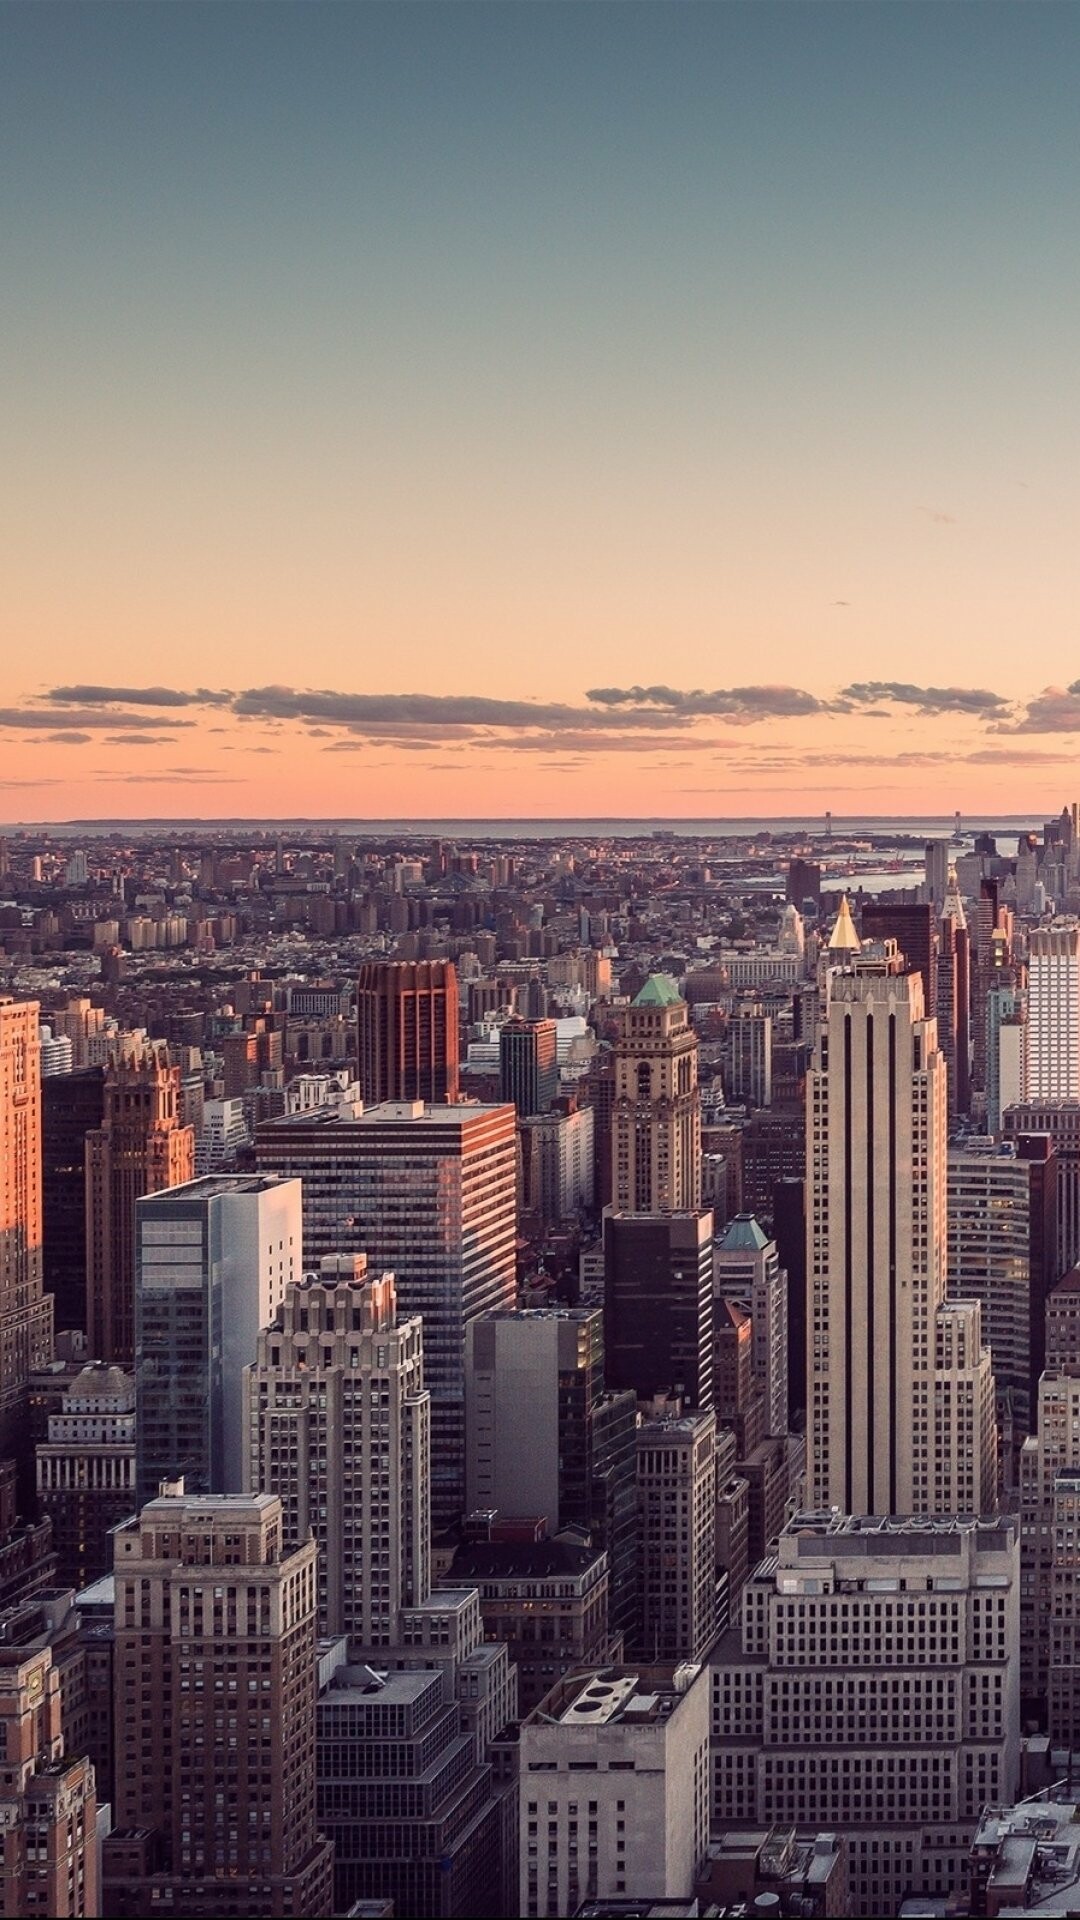 United States: NY roofs, Big Apple, Skyscrapers, Urban design. 1080x1920 Full HD Wallpaper.